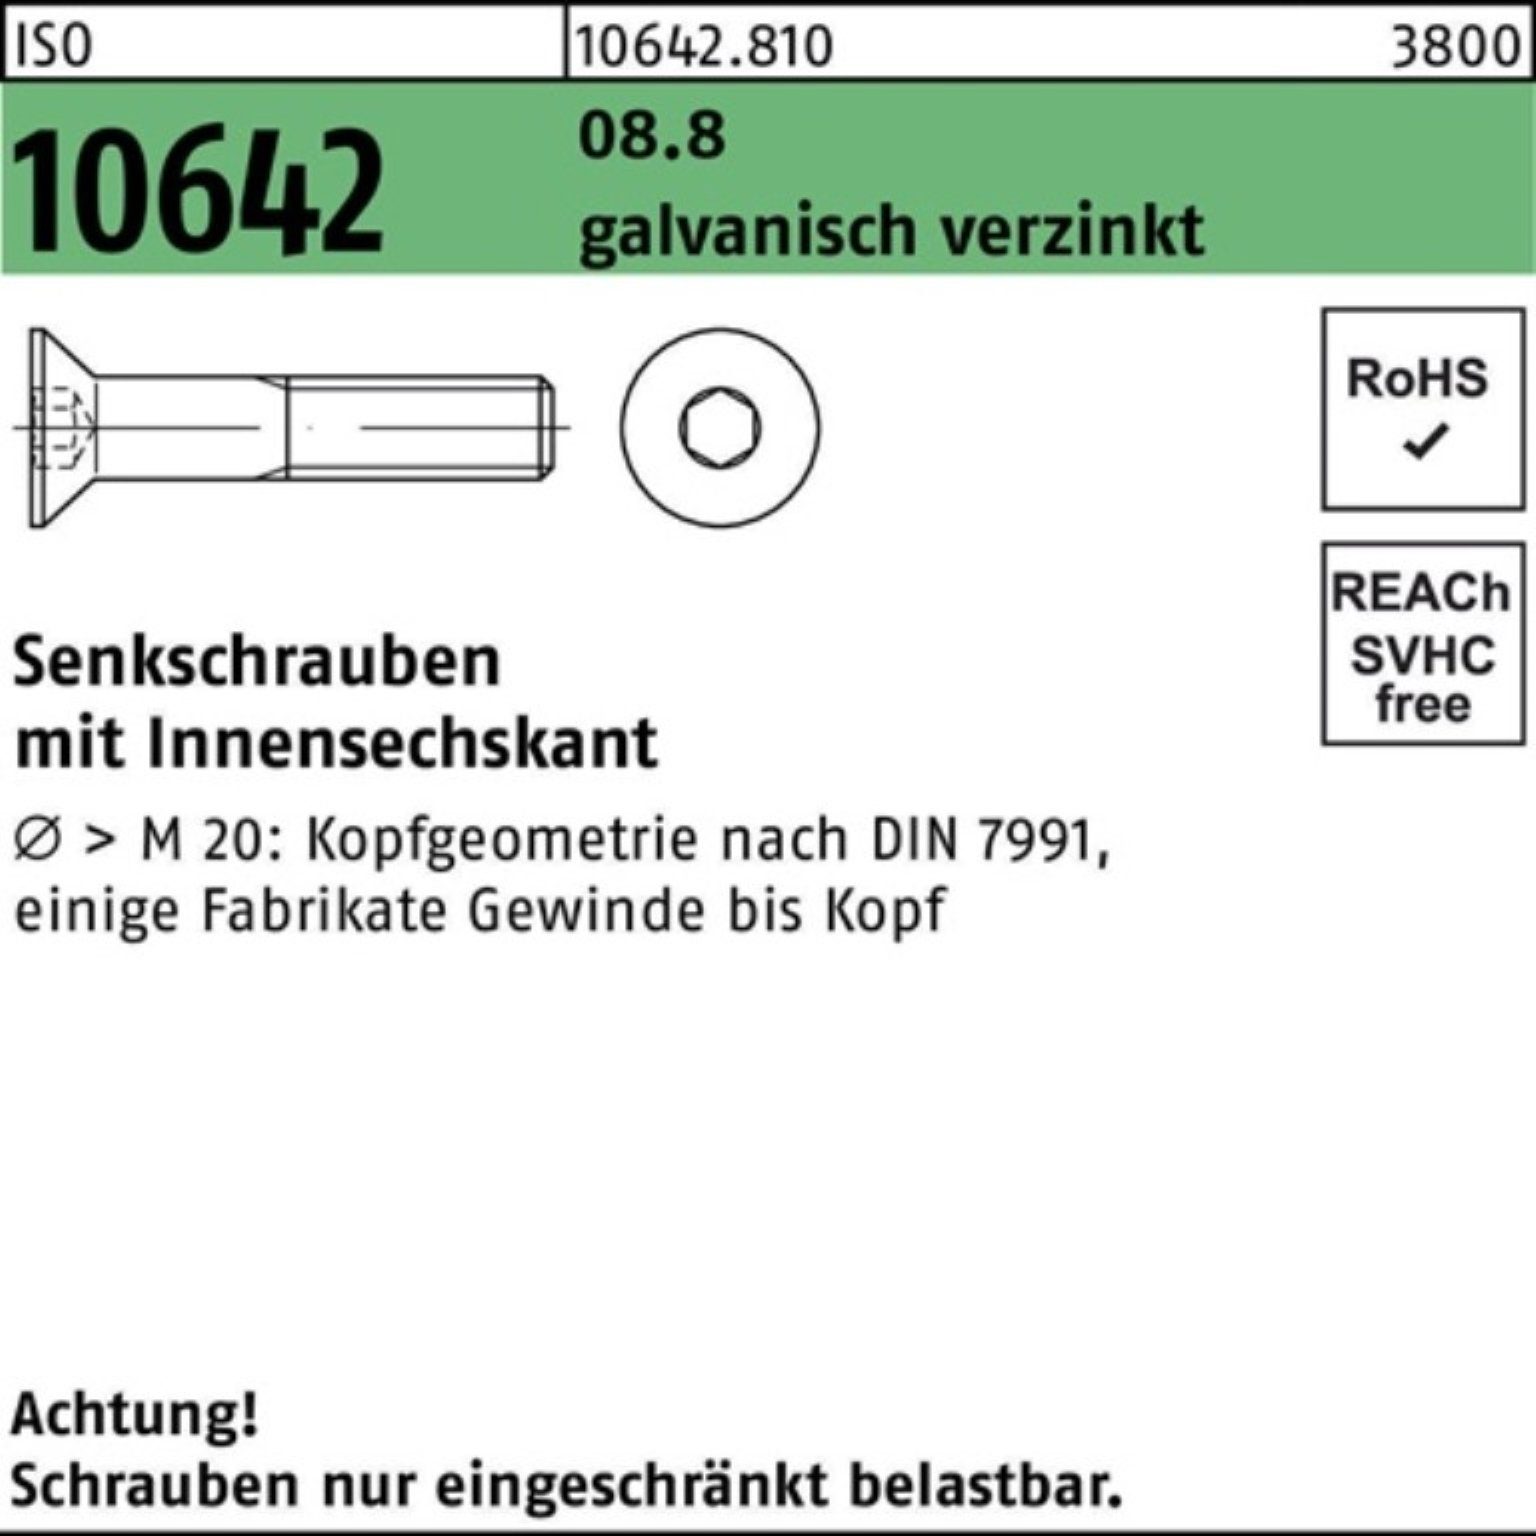 Pack 10642 Innen-6kt galv.verz. 50 ISO Senkschraube M16x 55 Reyher Senkschraube 8.8 100er